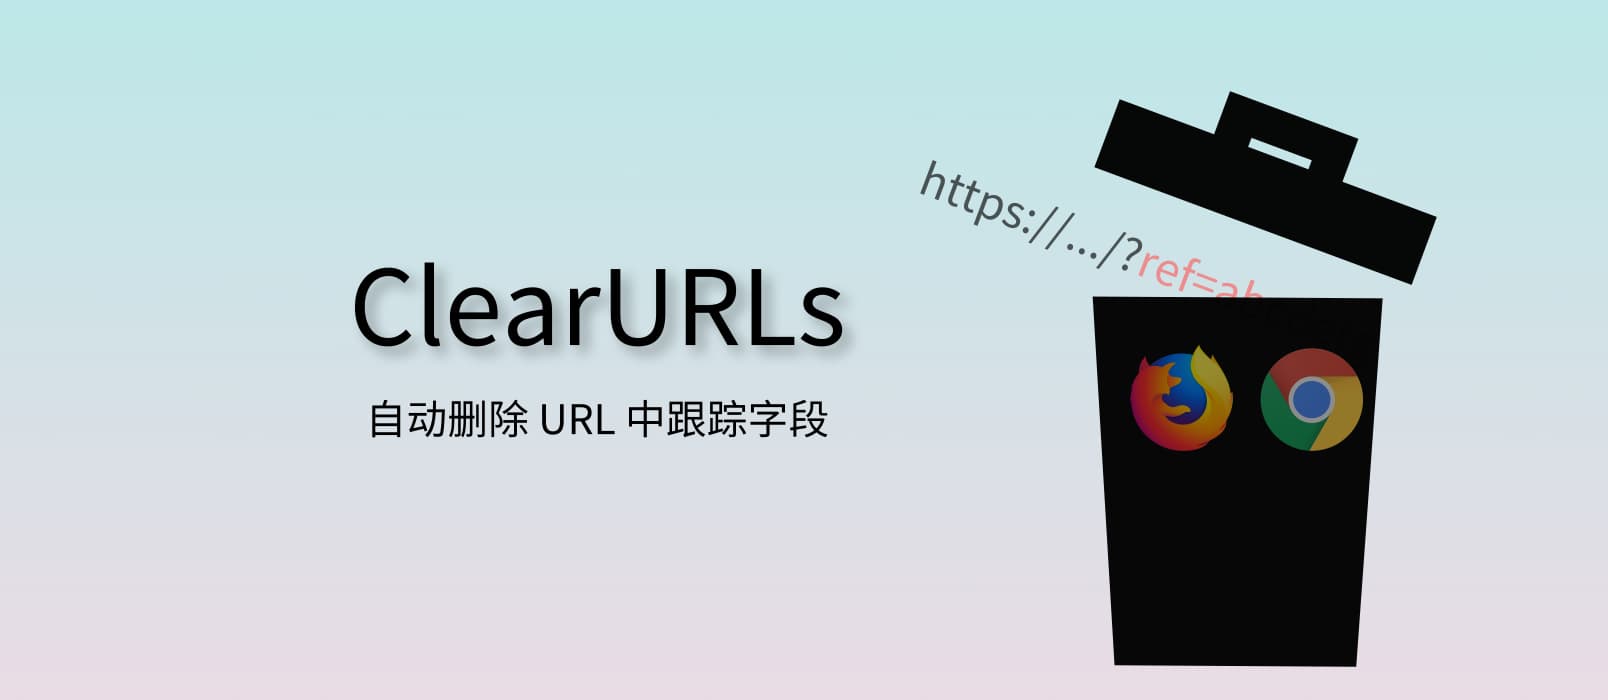 ClearURLs - 自动删除 URL 中跟踪字段[Chrome/Firefox] 1